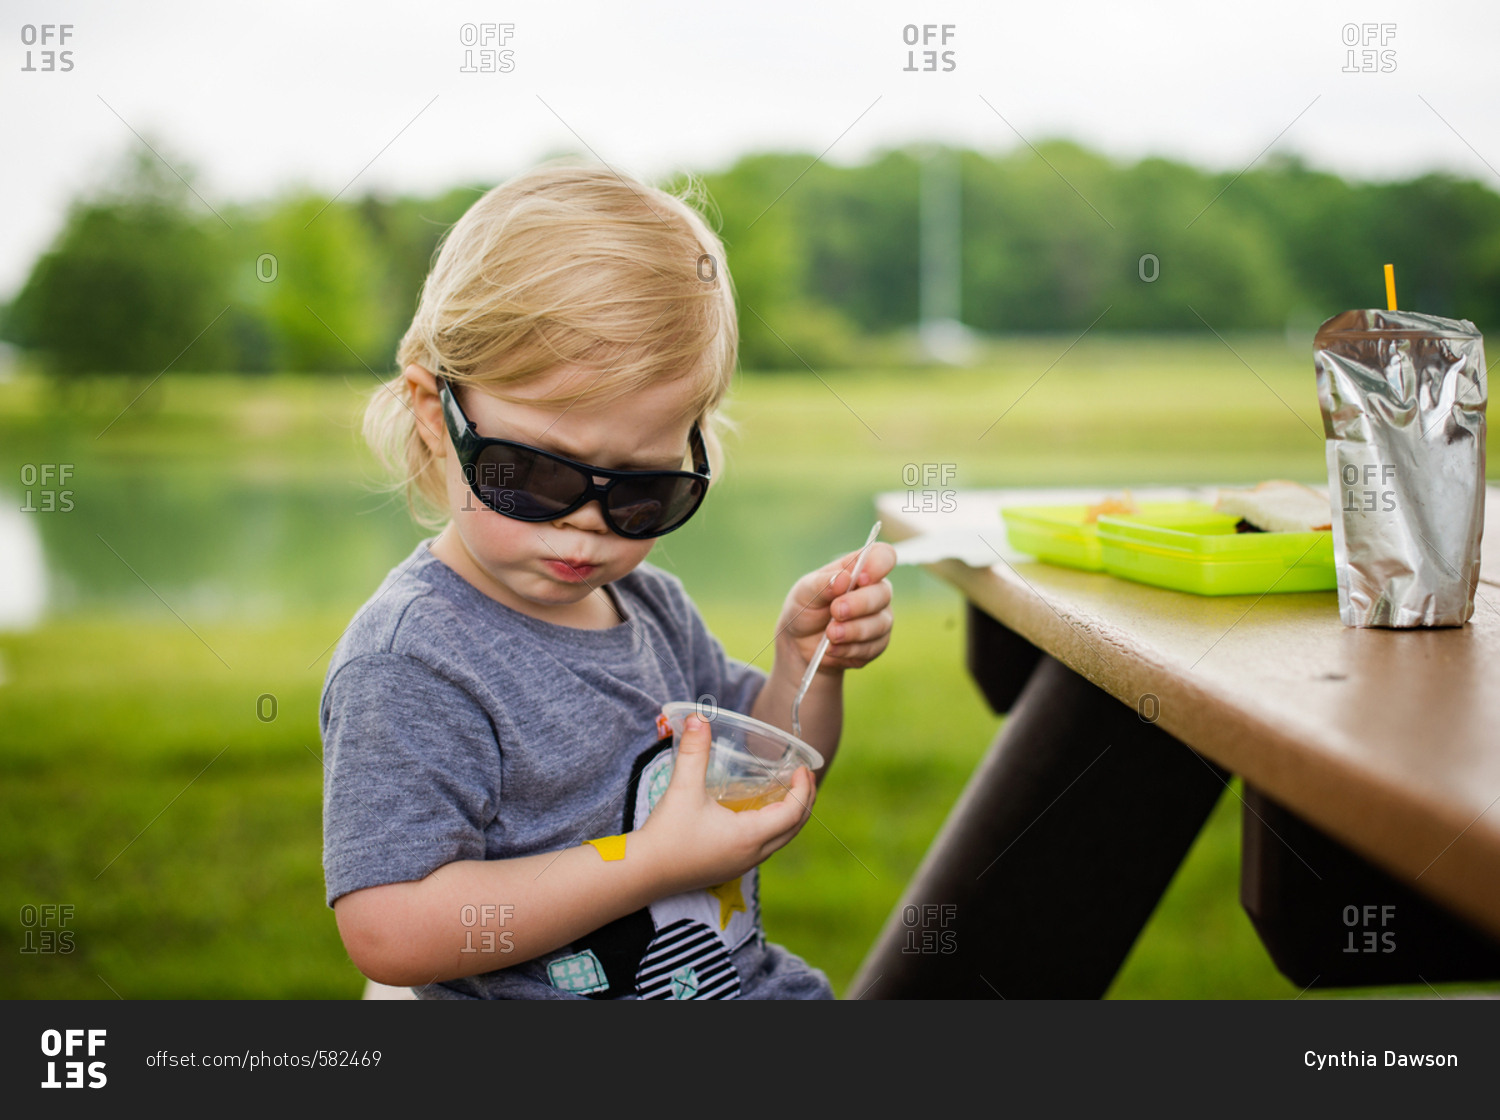 Toddler boy wearing sunglasses eating at picnic table